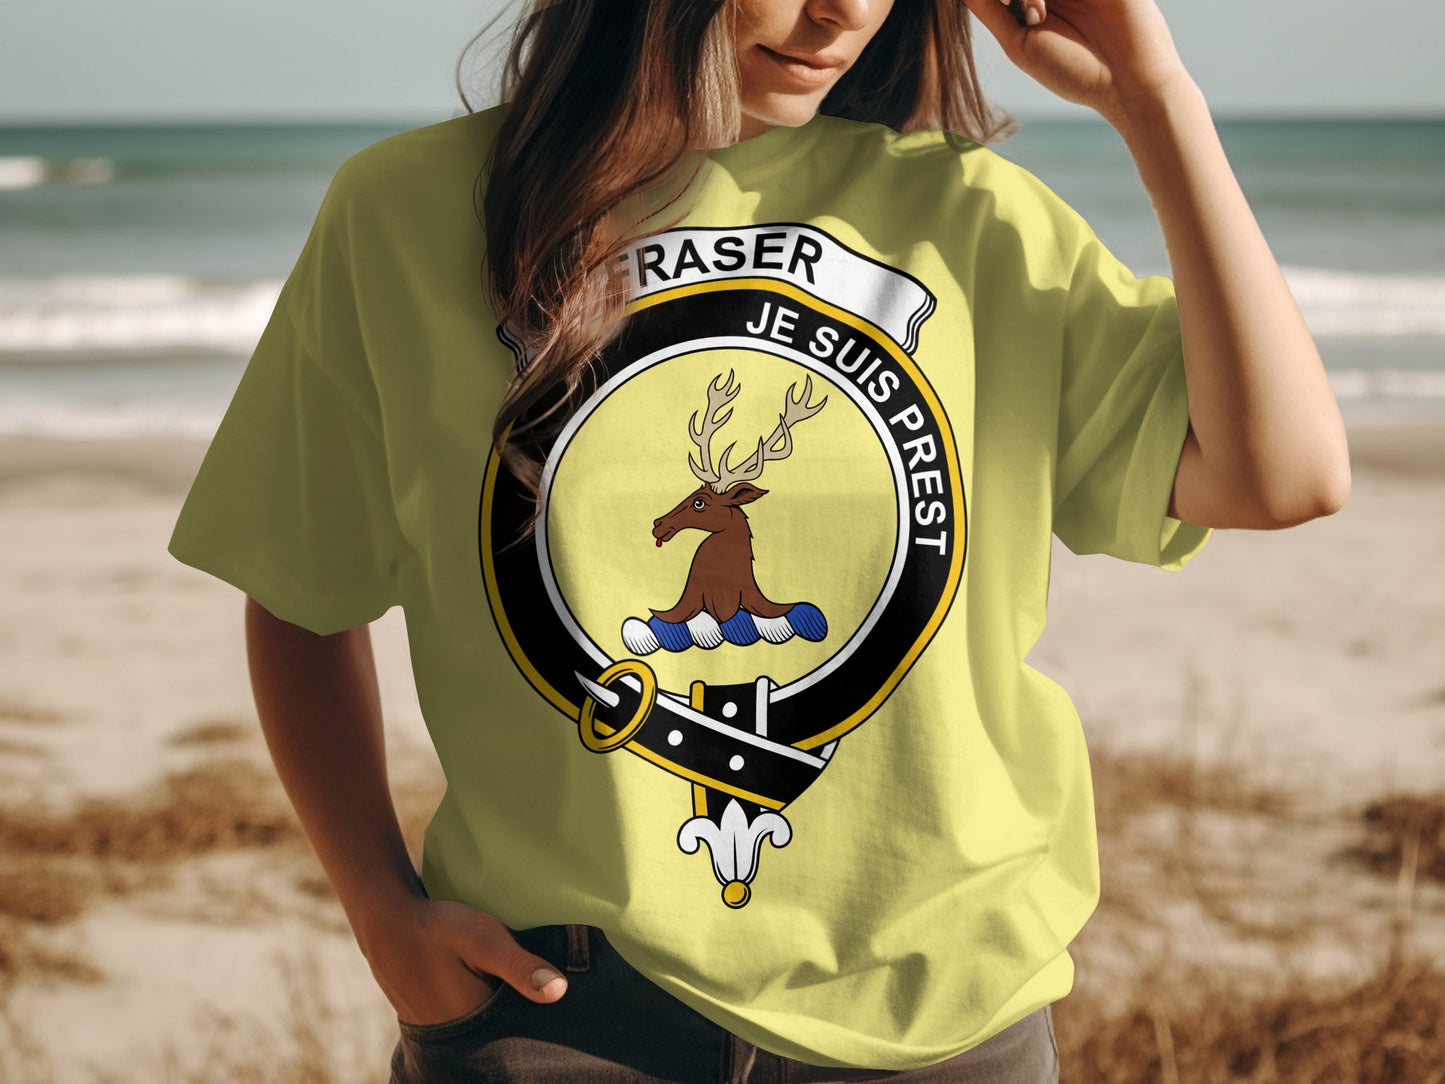 Fraser Scottish Clan Crest Highland Games T-Shirt - Living Stone Gifts